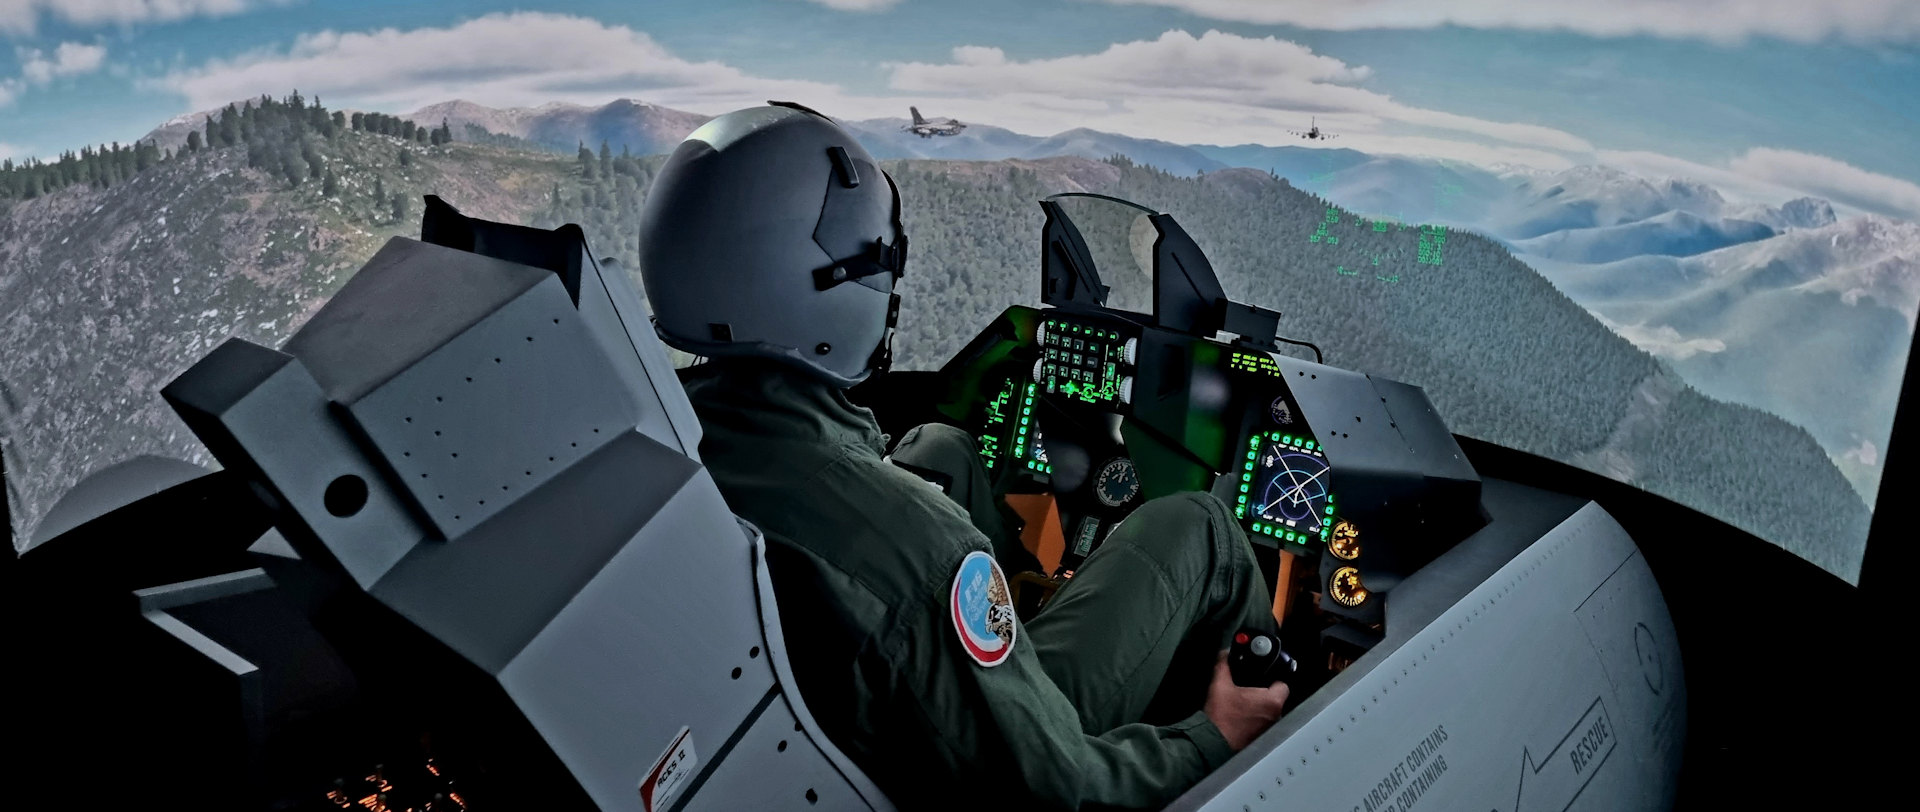 Turnkey F-16 Fighter Jet Simulator in 8 weeks